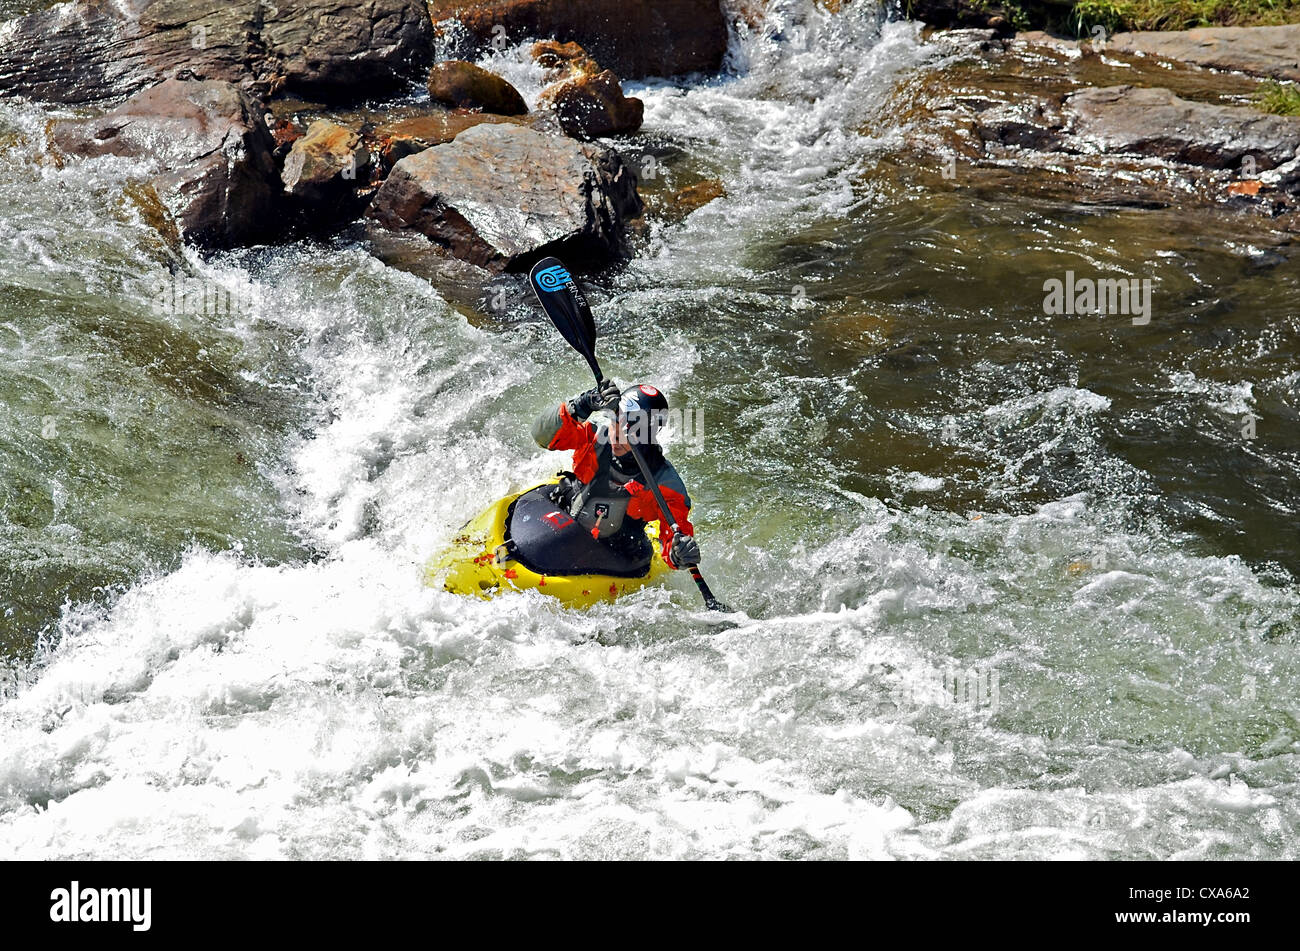 BRYSON CITY, NC, USA - SEPTEMBER 12: Unidentified man kayaking the white water rapids of the Nantahala River September 12, 2012. Stock Photo